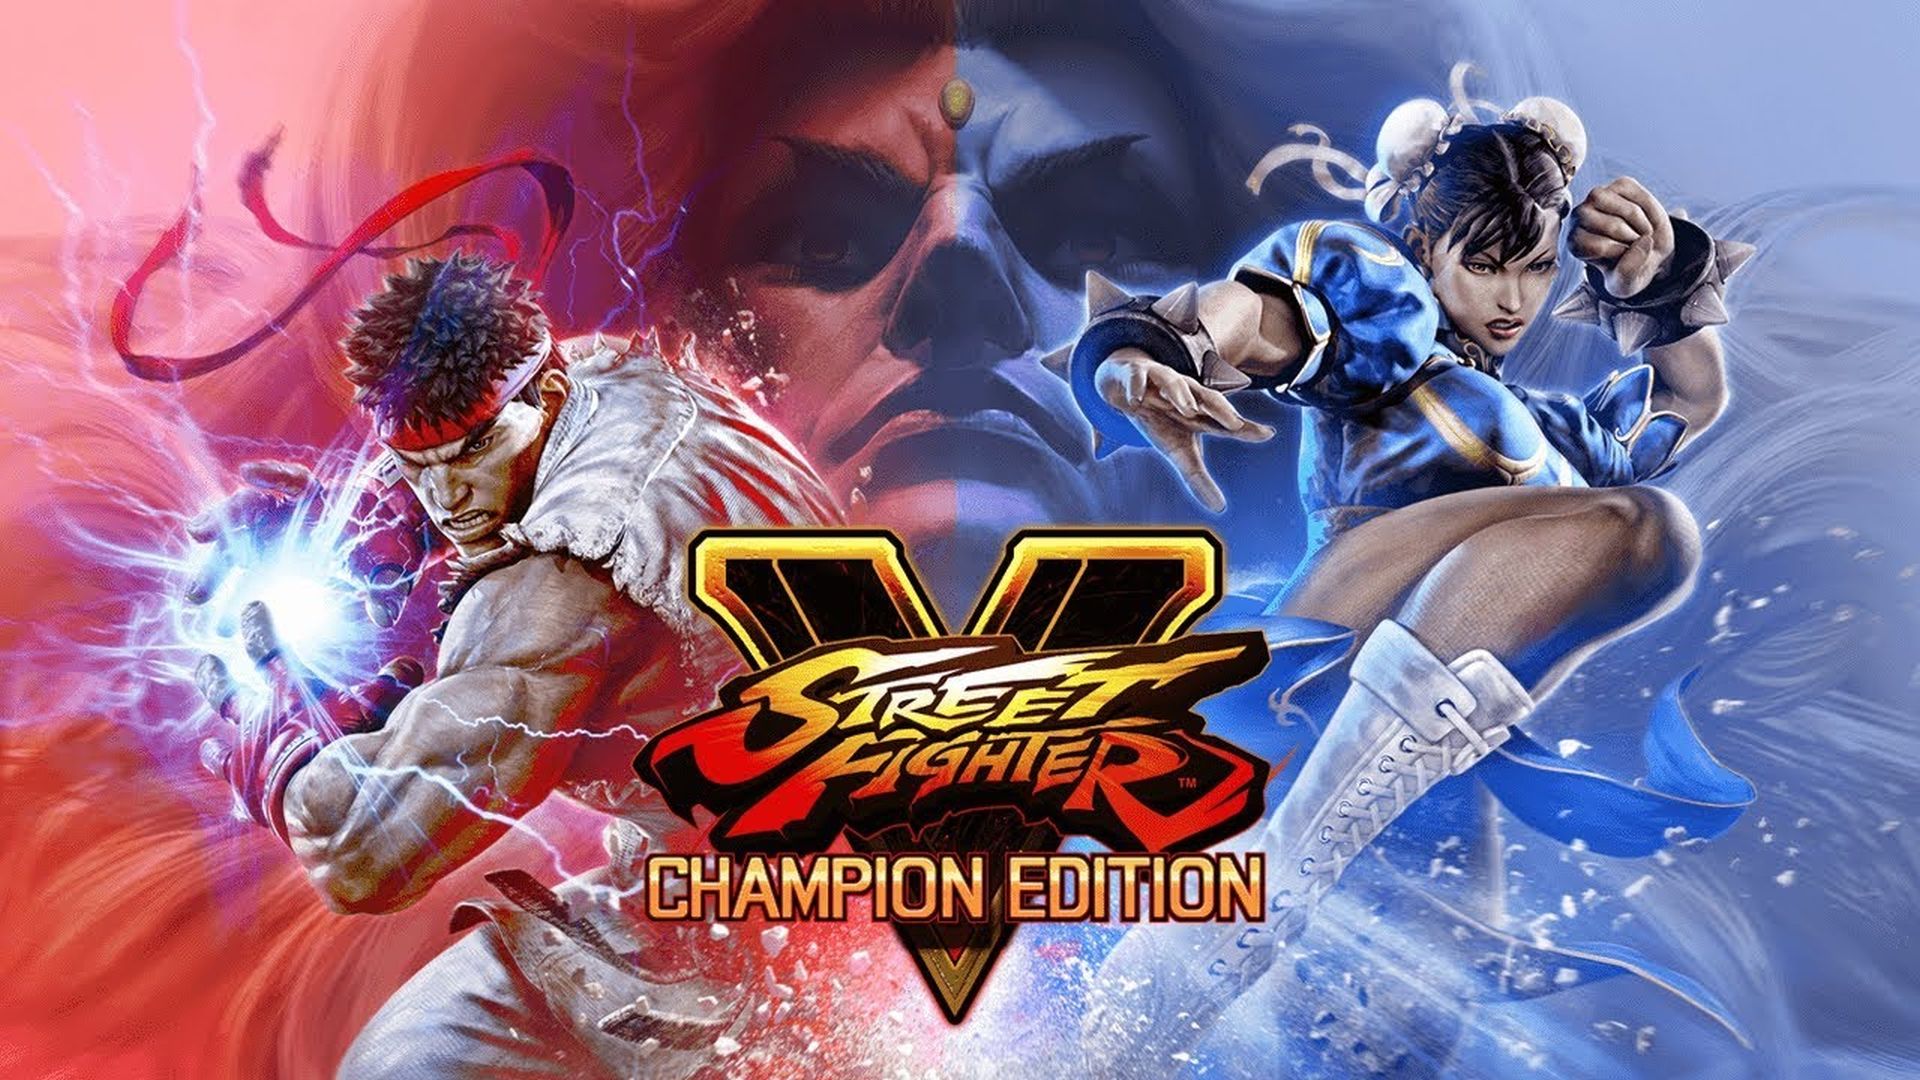 Street Fighter 5: Champion Edition เปิดให้ทดลองเล่นฟรีจนถึงวันที่ 11 พฤษภาคมนี้